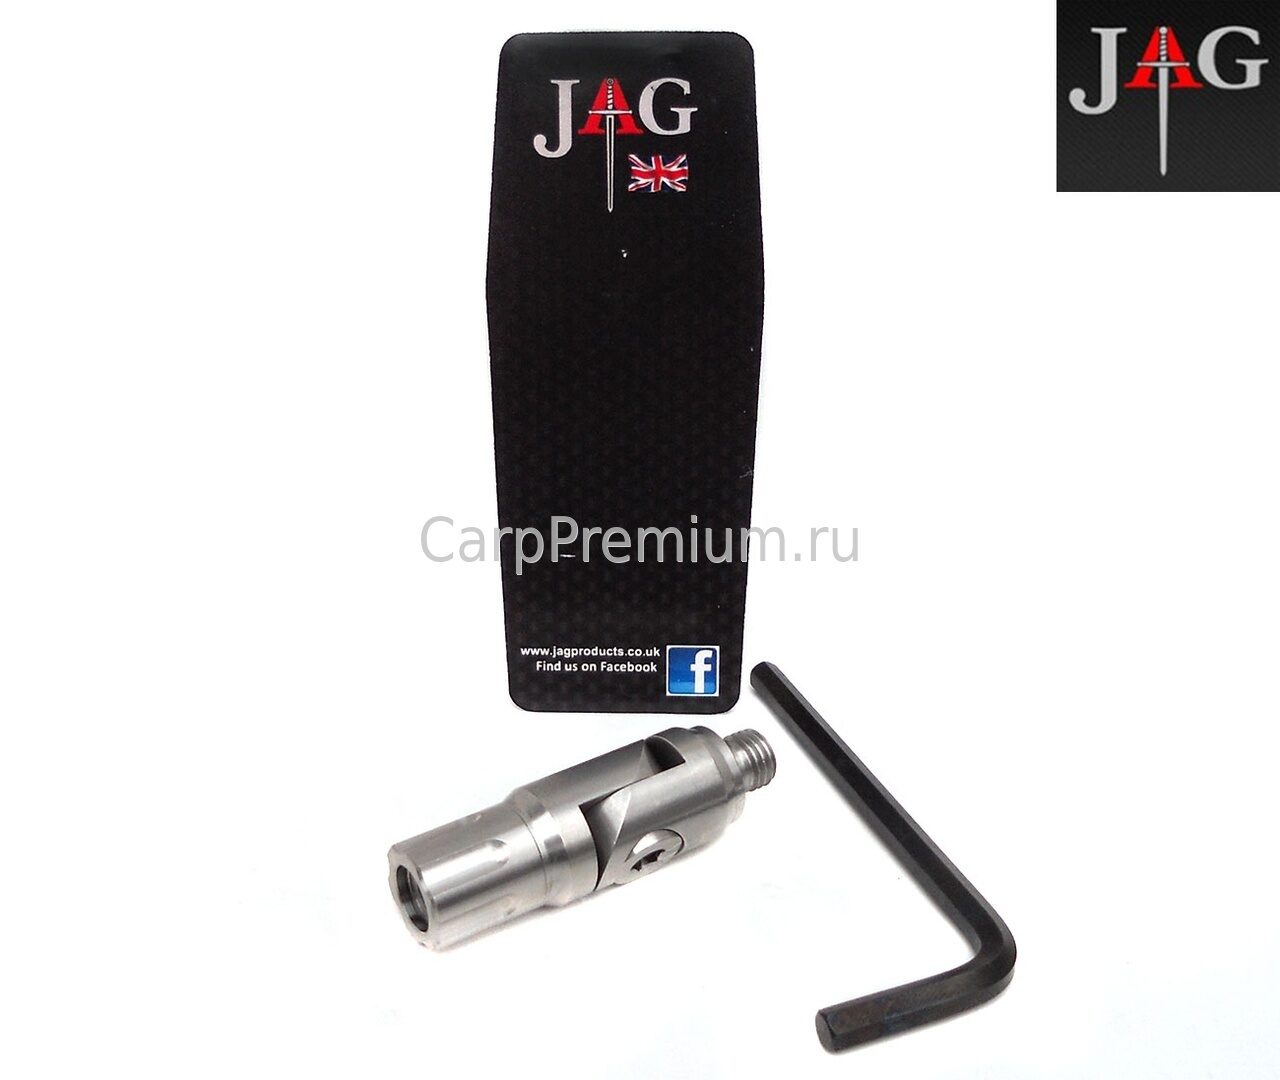 Адаптер для изменения угла наклона JAG (Джаг) - High Tipper 316